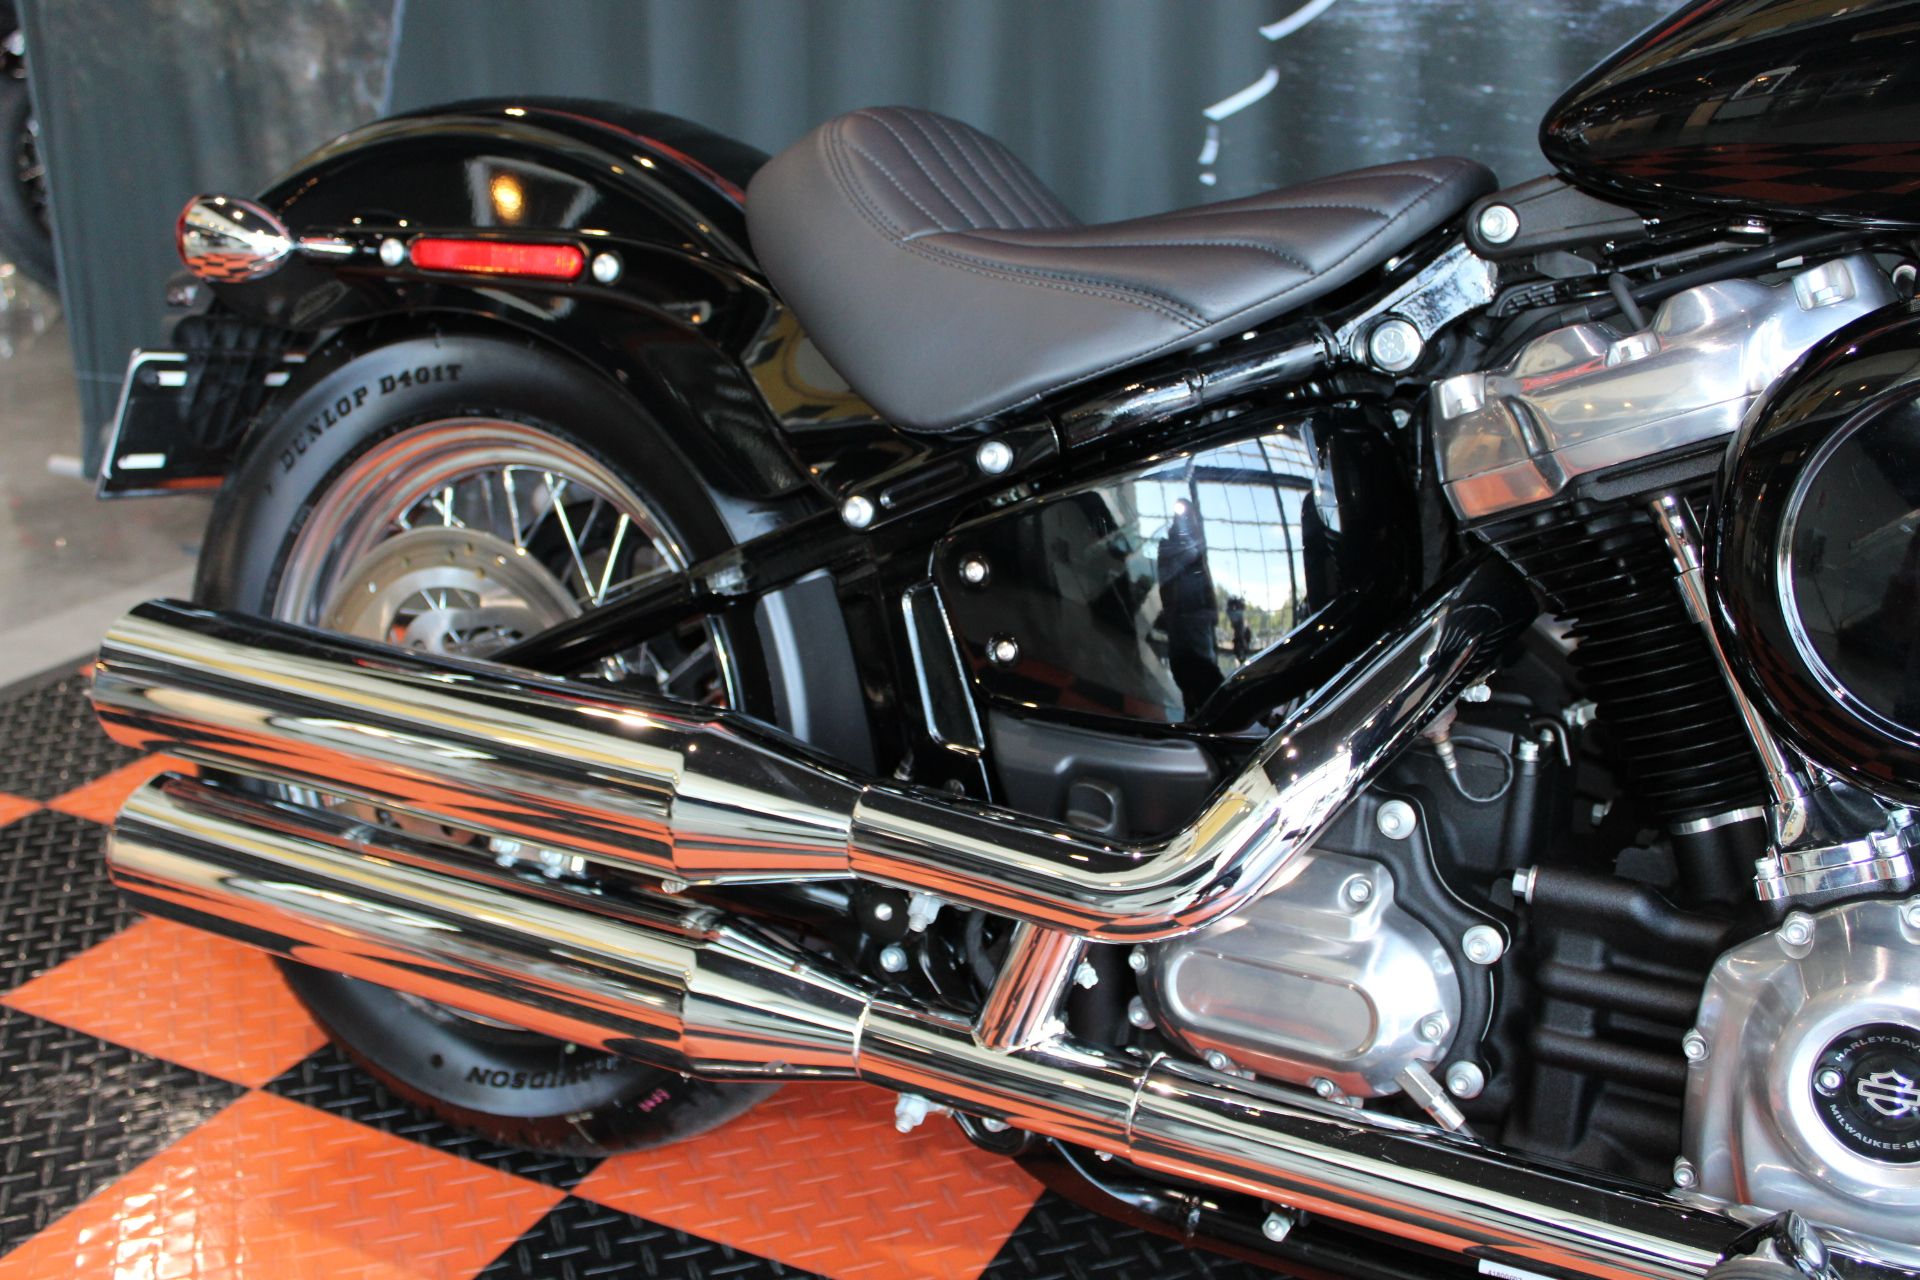 2020 Harley-Davidson Softail® Standard in Shorewood, Illinois - Photo 7